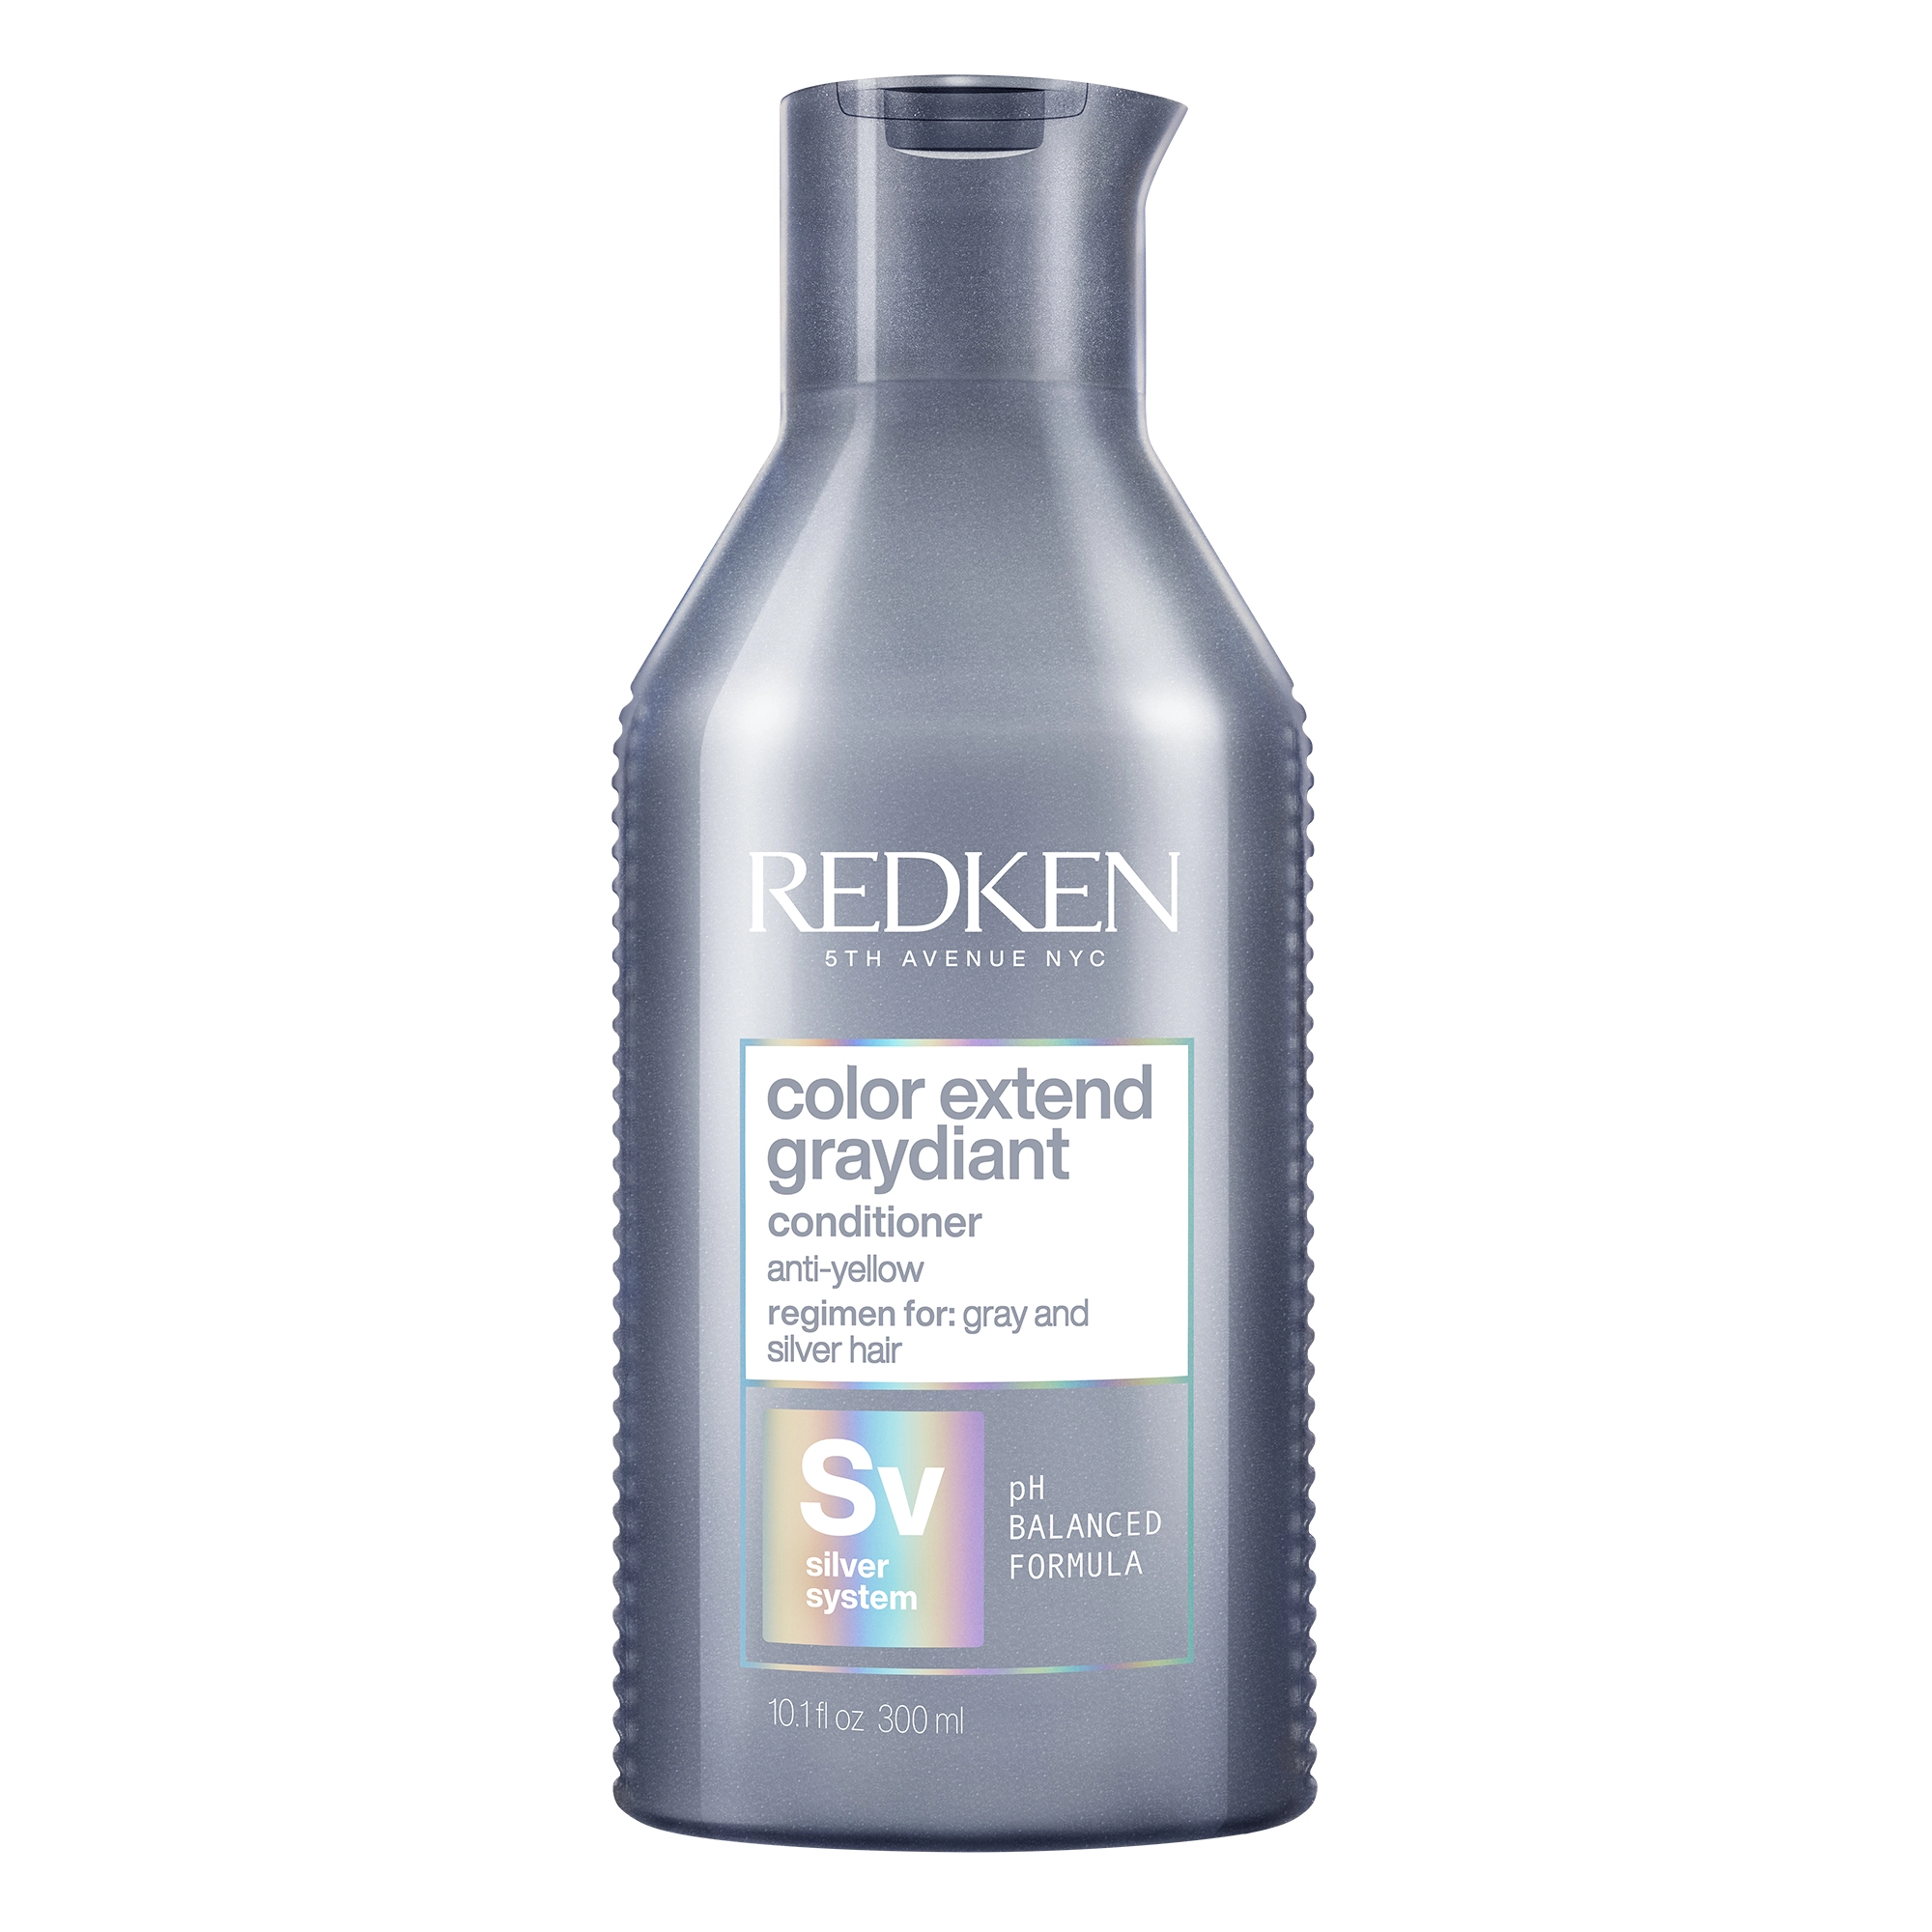 Redken 2020 Color Extend Graydiant Conditioner Product Shot 2000x2000 1 jpg